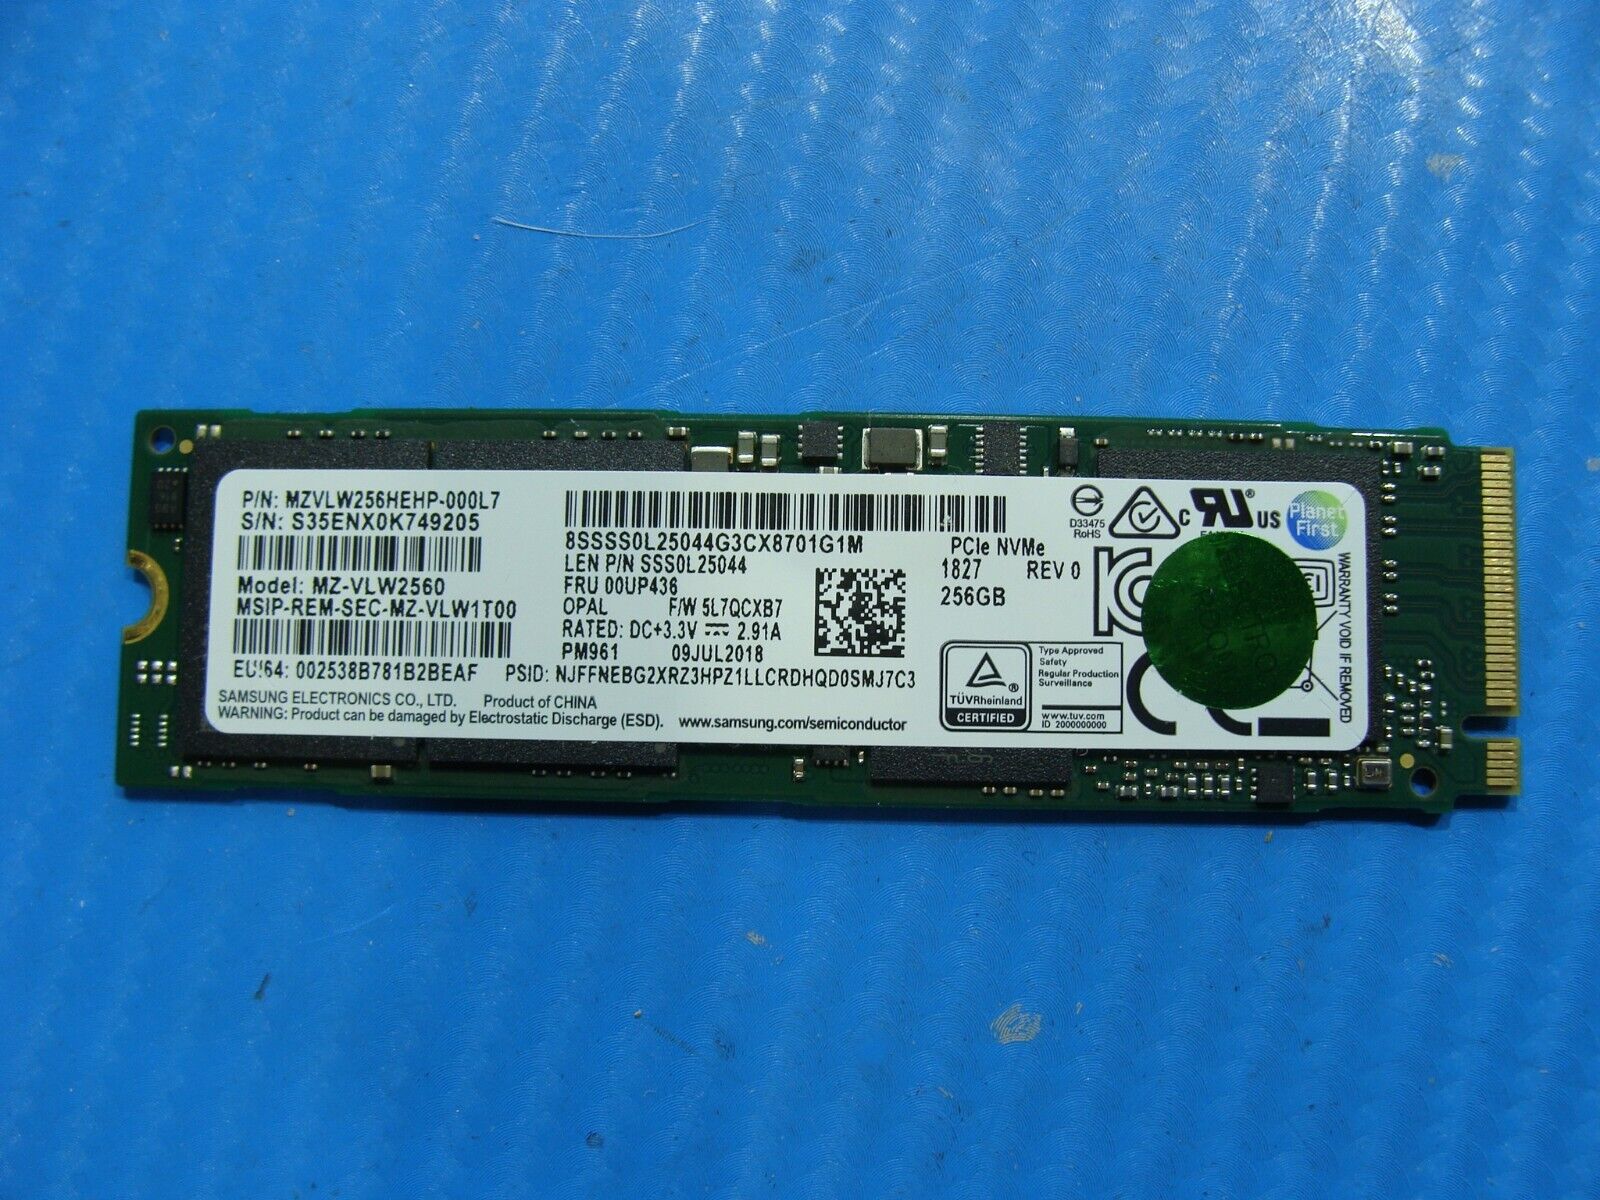 Lenovo X280 Samsung 256GB NVMe M.2 SSD Solid State Drive MZVLW256HEHP-000L7